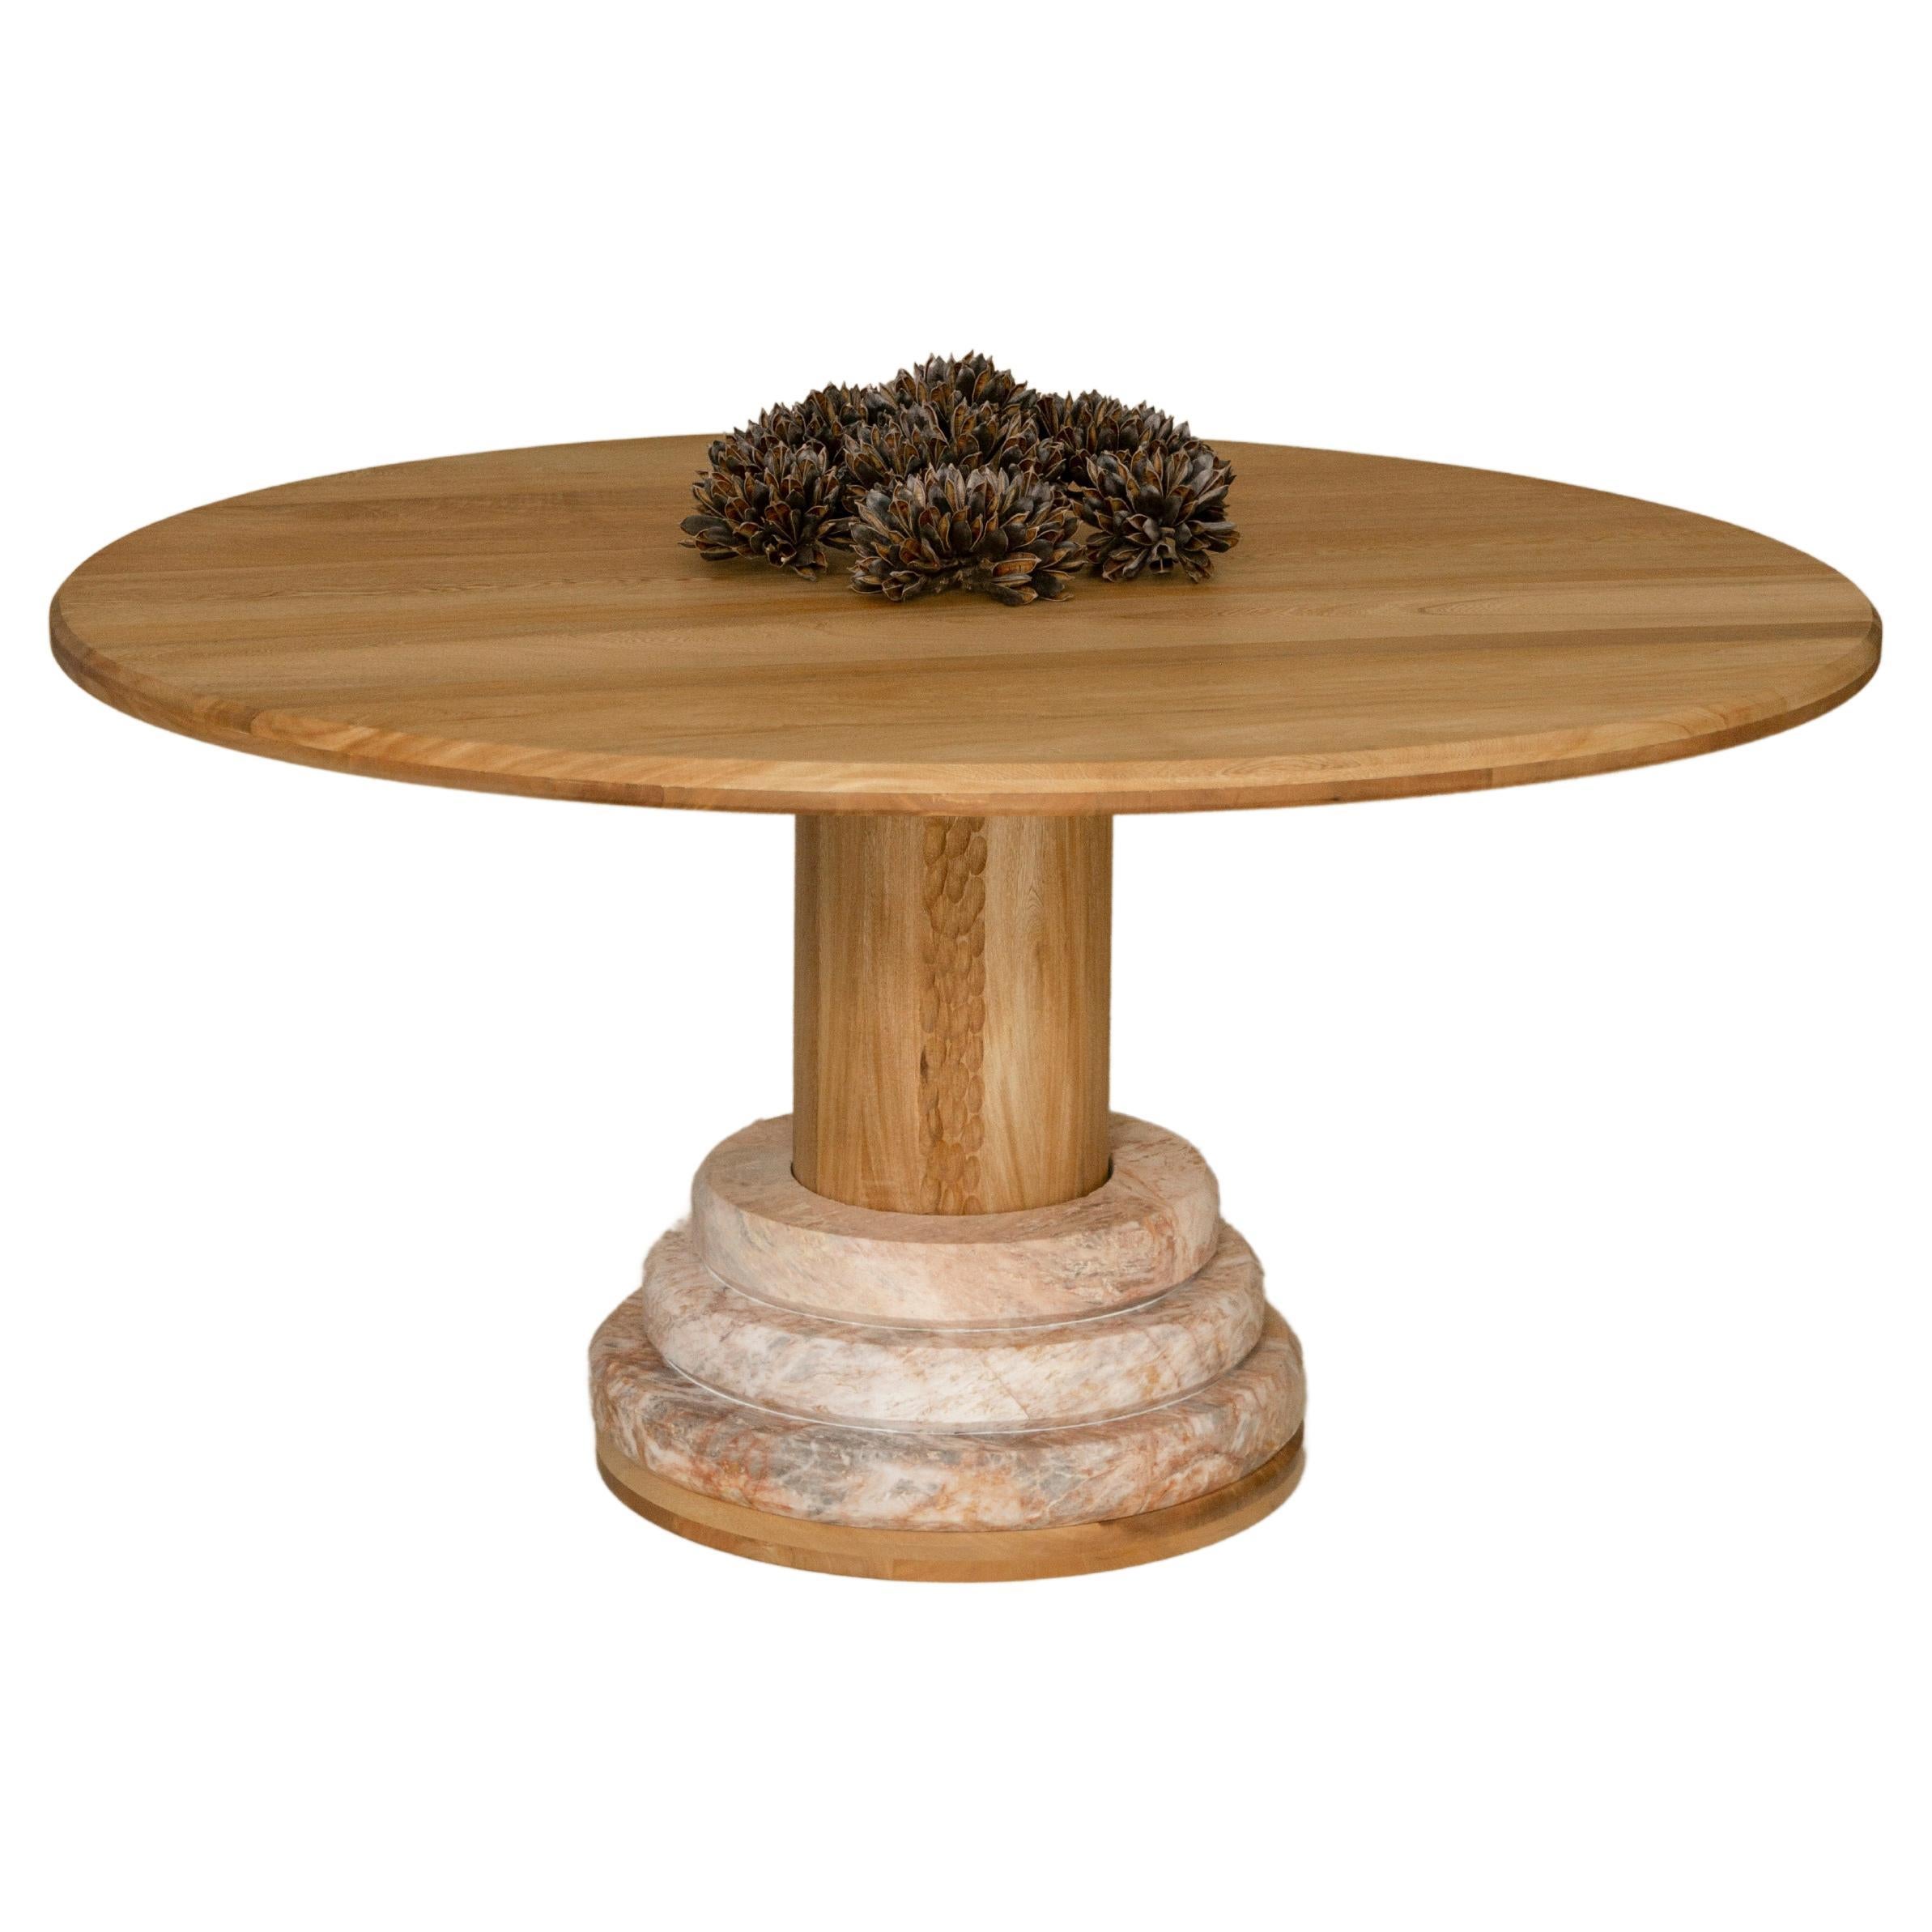 Kayah table in rosa morada wood designed by Tana Karei